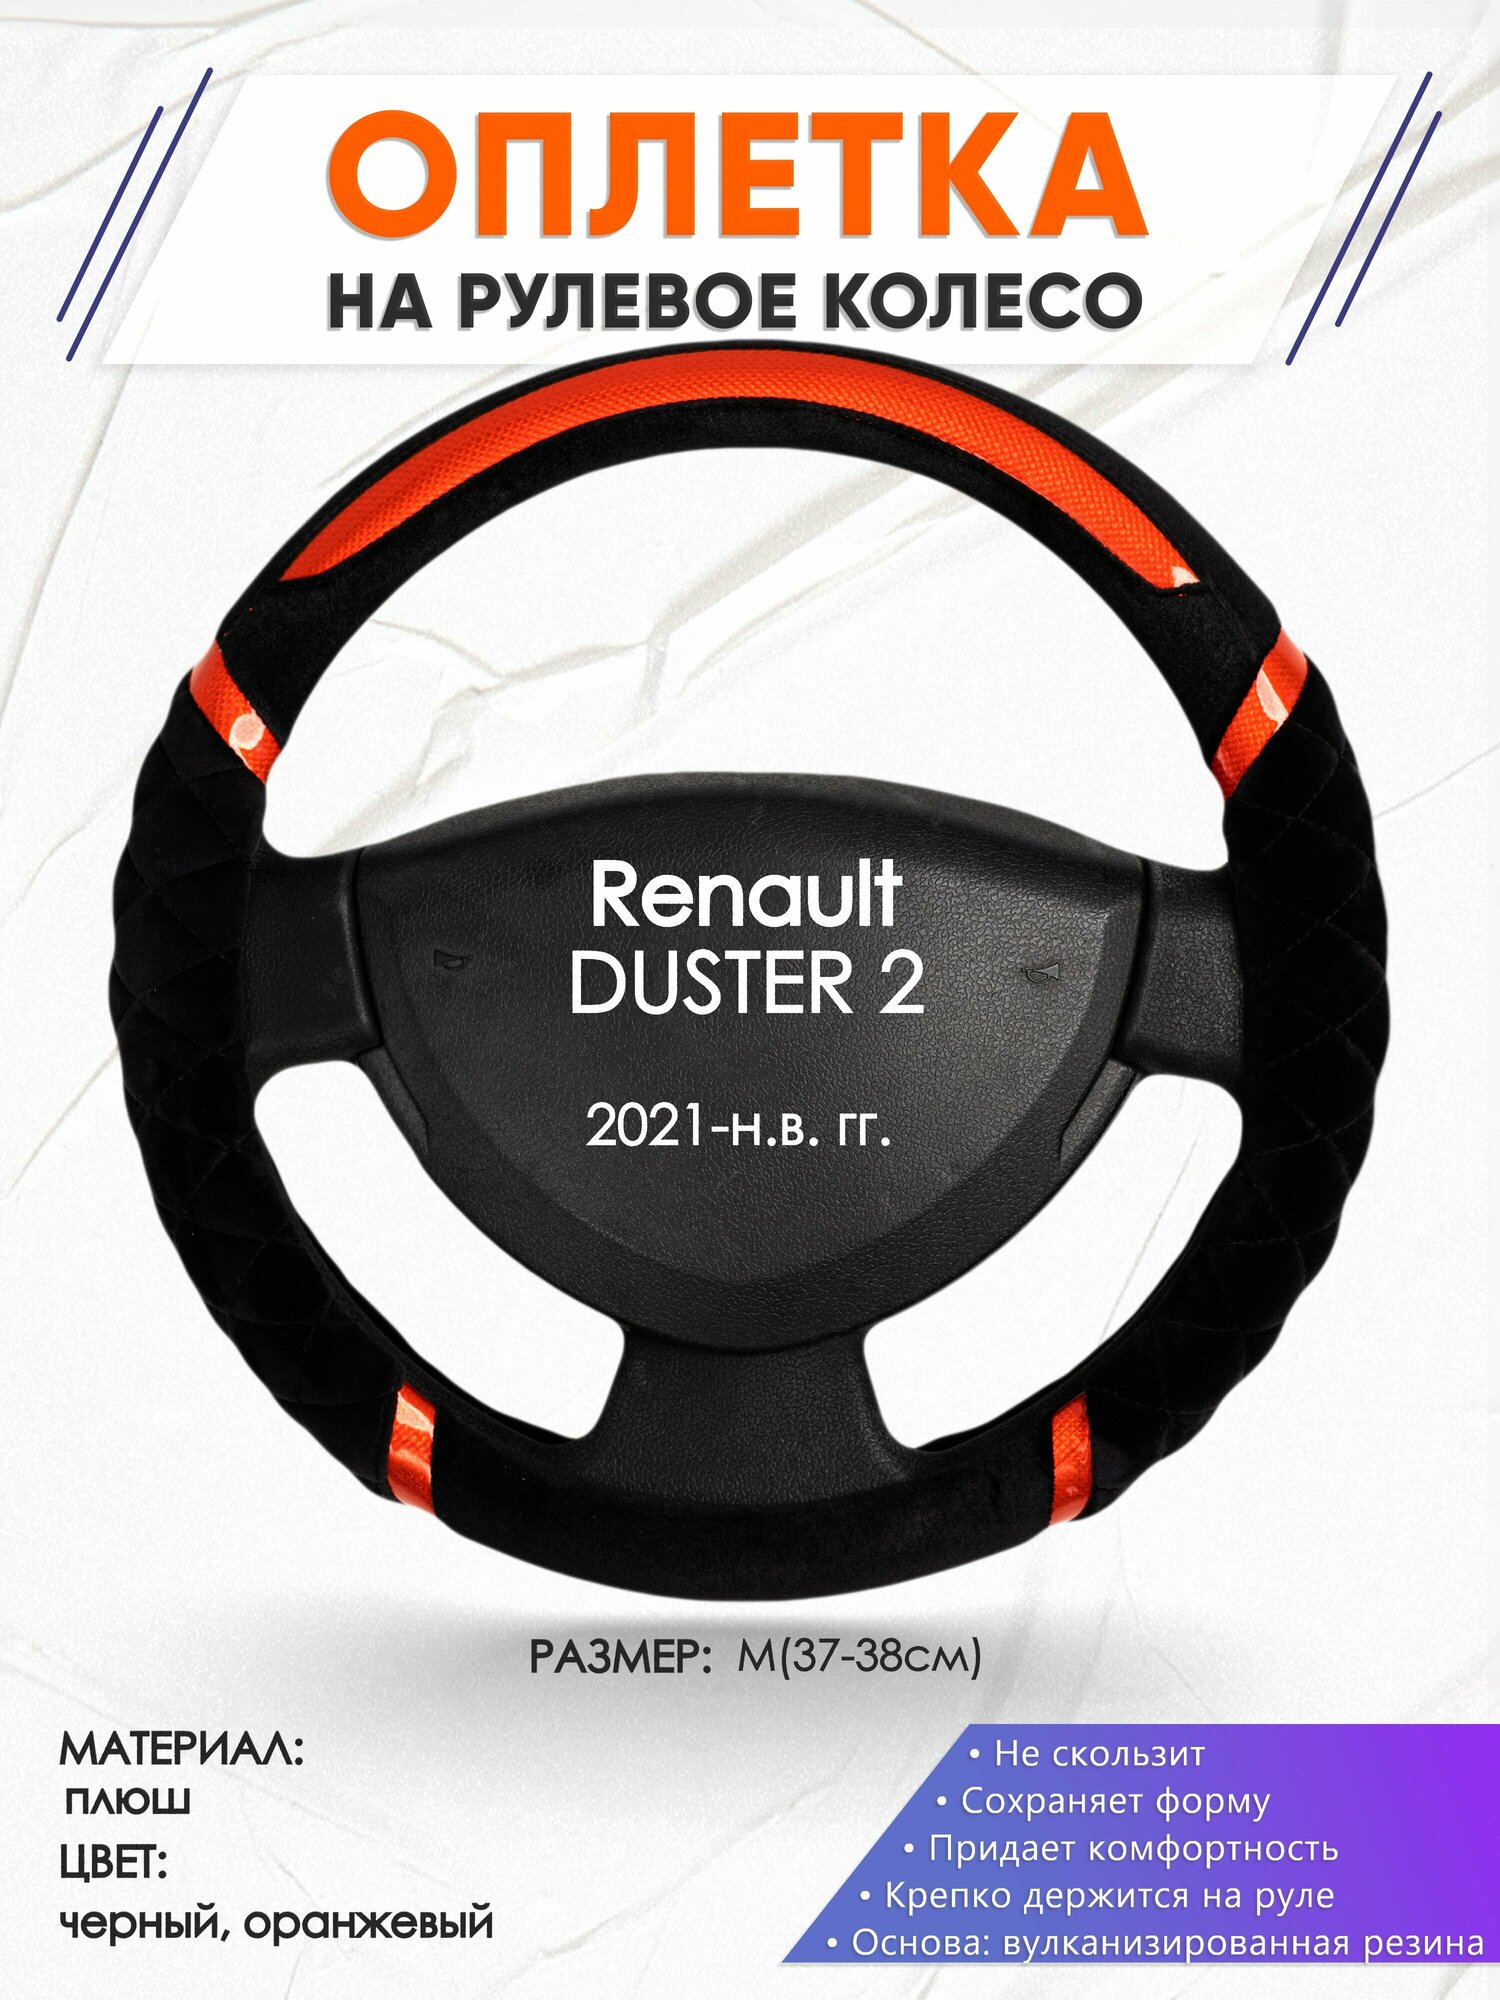 Оплетка наруль для Renault DUSTER 2(Рено Дастер 2) 2021-н. в. годов выпуска размер M(37-38см) Замша 36